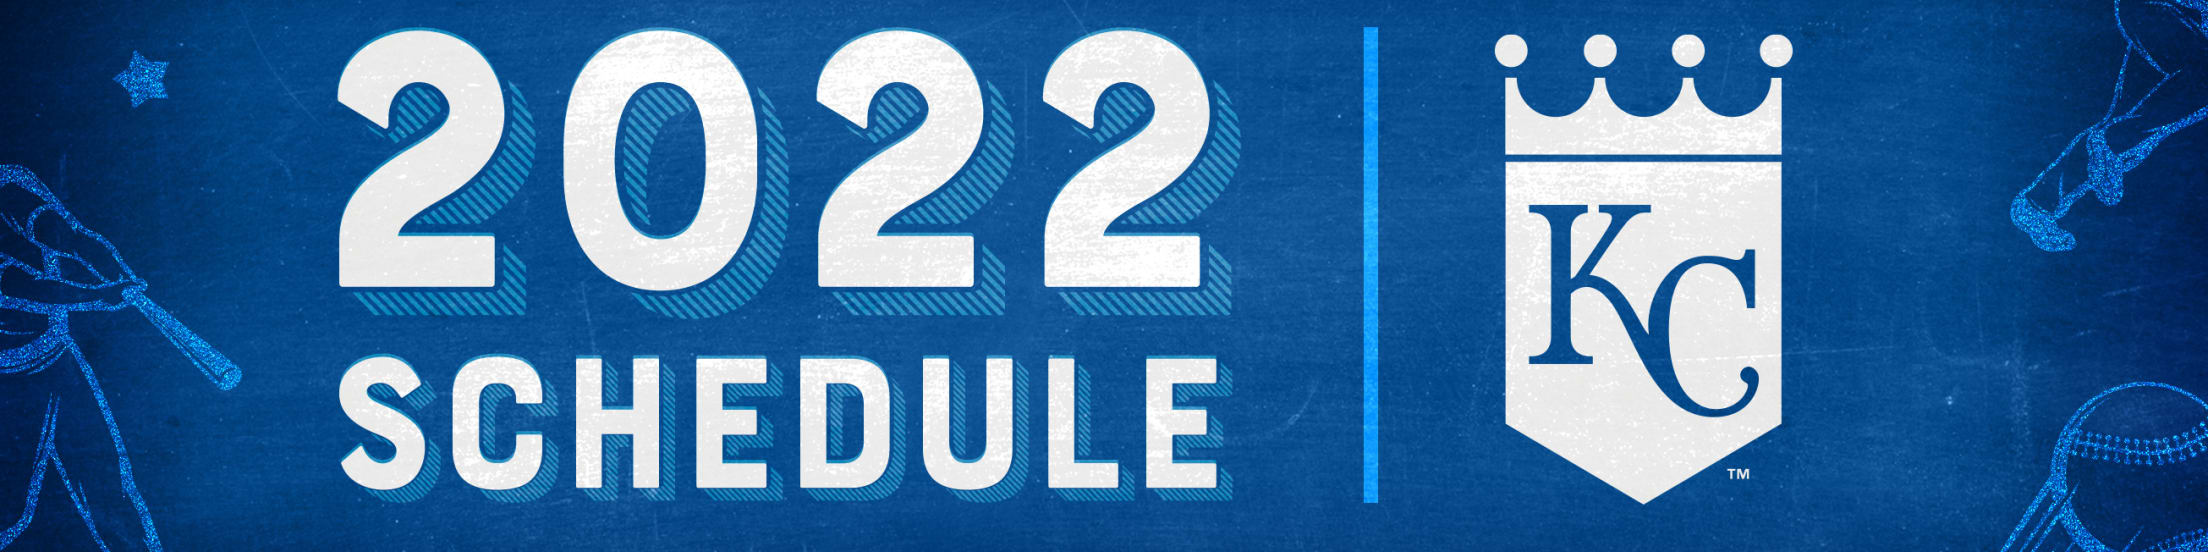 Kc Royals Schedule 2022 Printable Schedule | Kansas City Royals